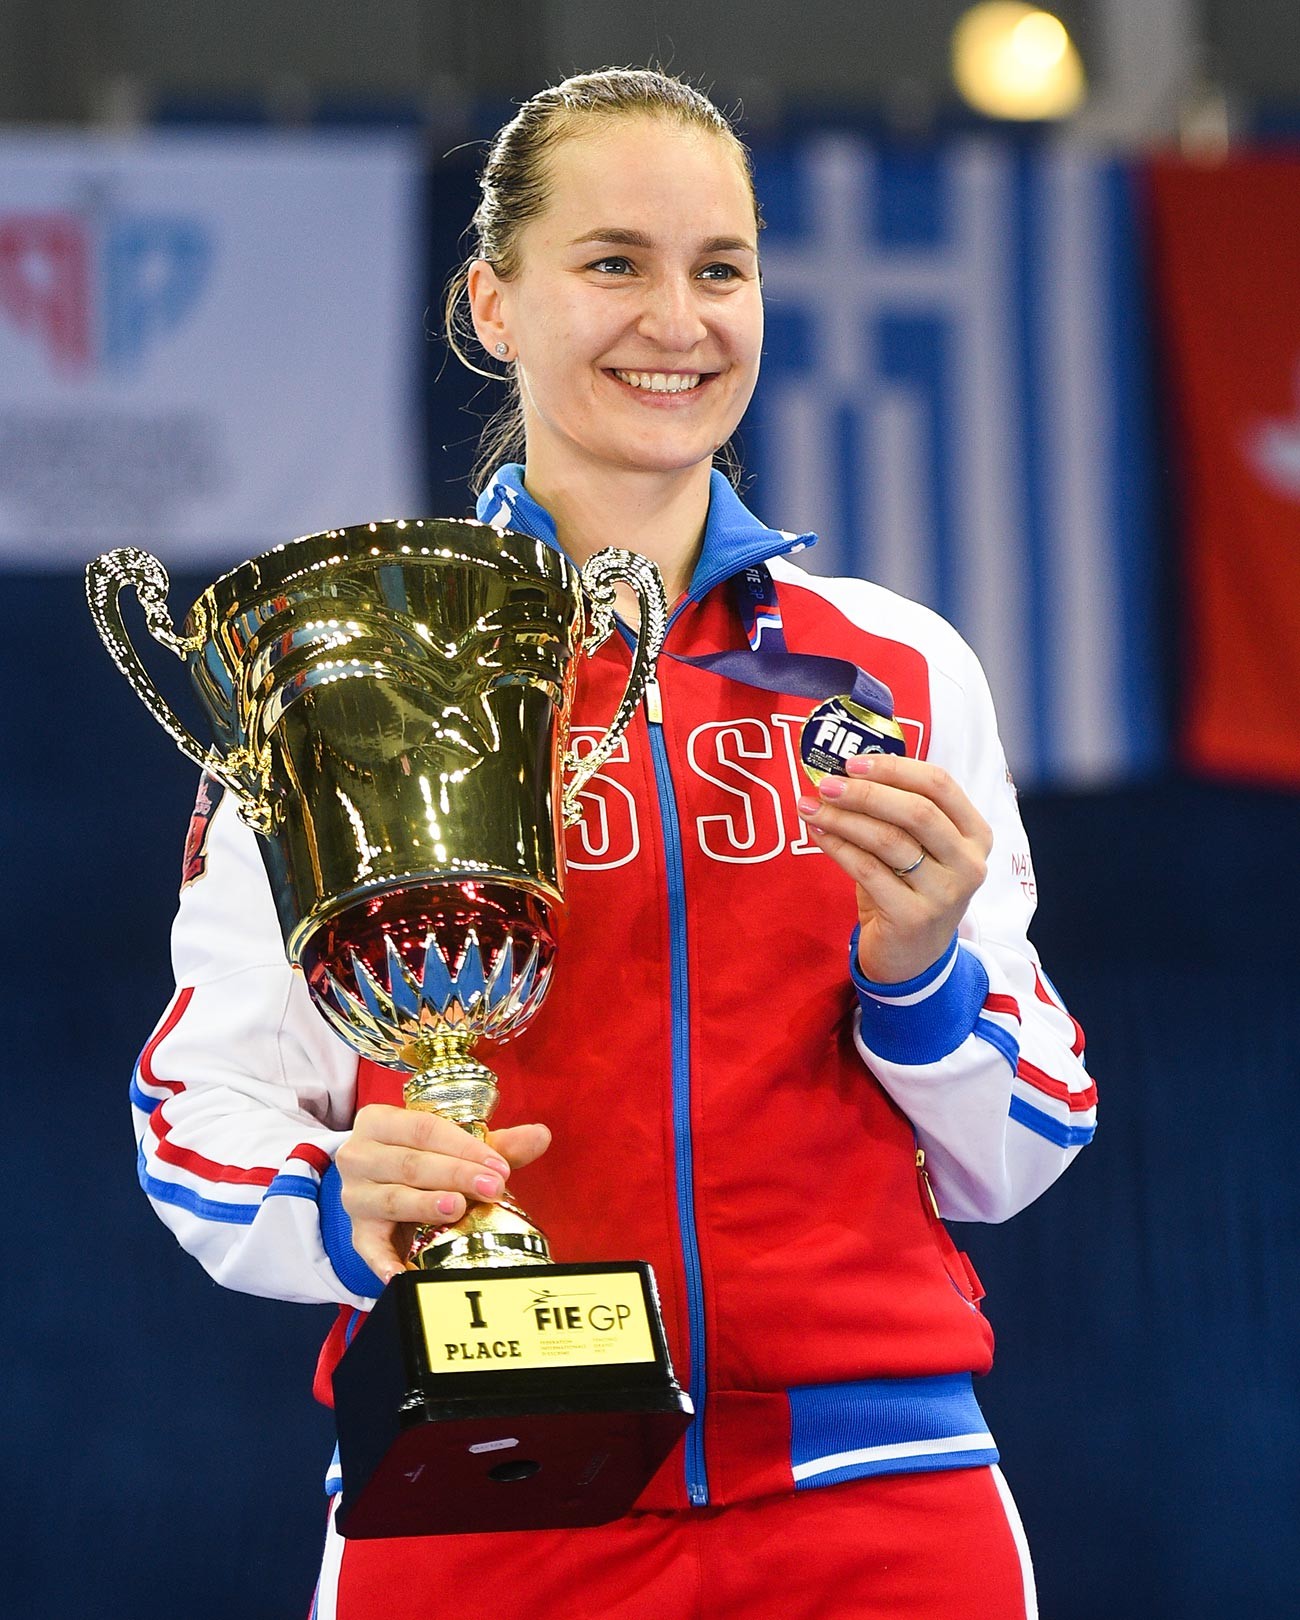 Pobjednica u ženskom prvenstvu na međunarodnom turniru mačevanja 